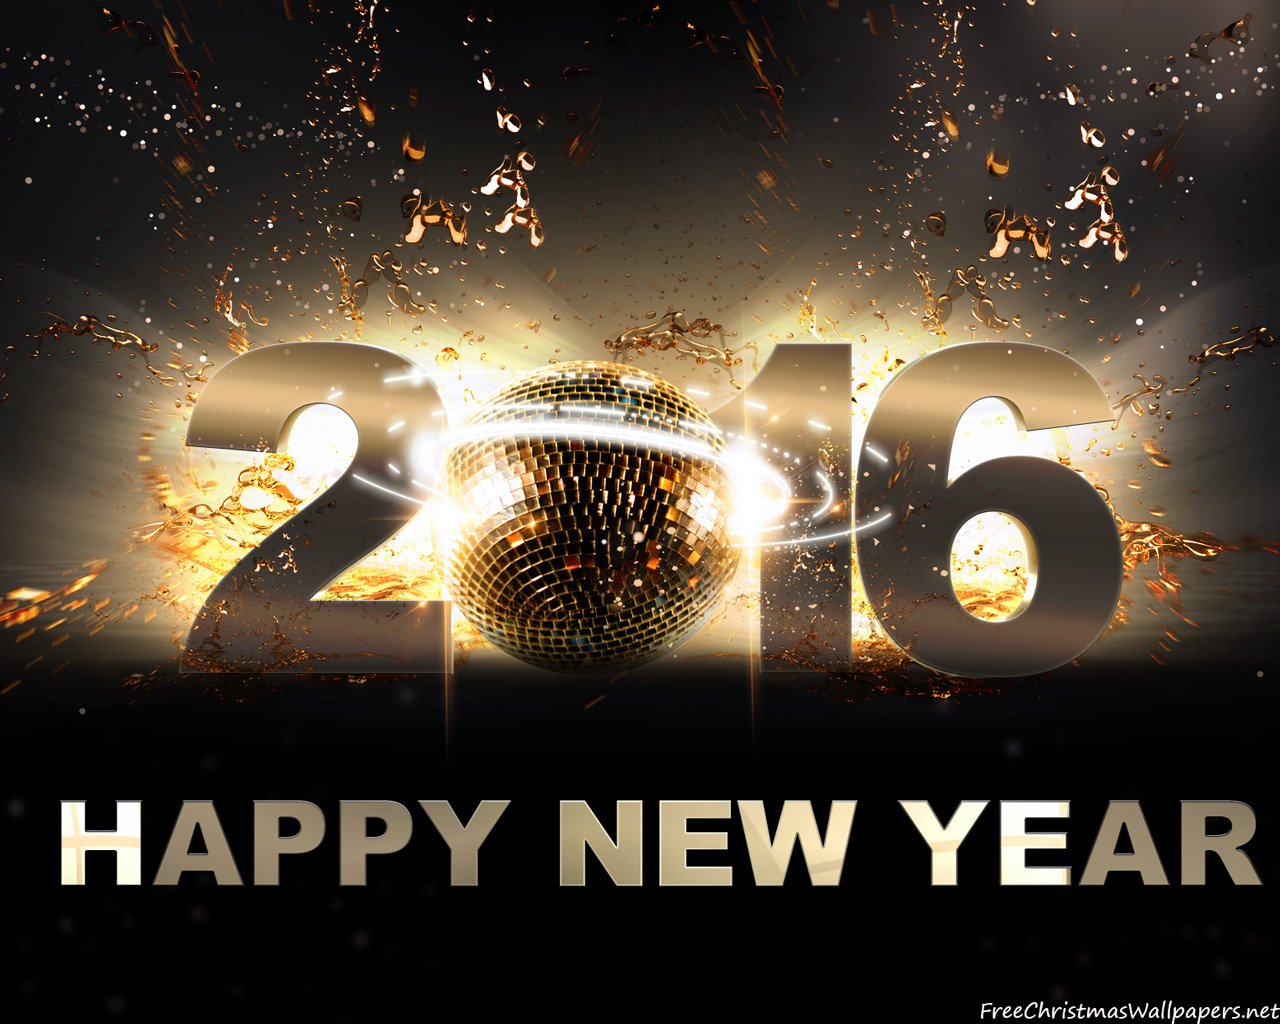 Download 2016 Happy New Year 1600x1200 1920x1080 1920x1200 1280x1024